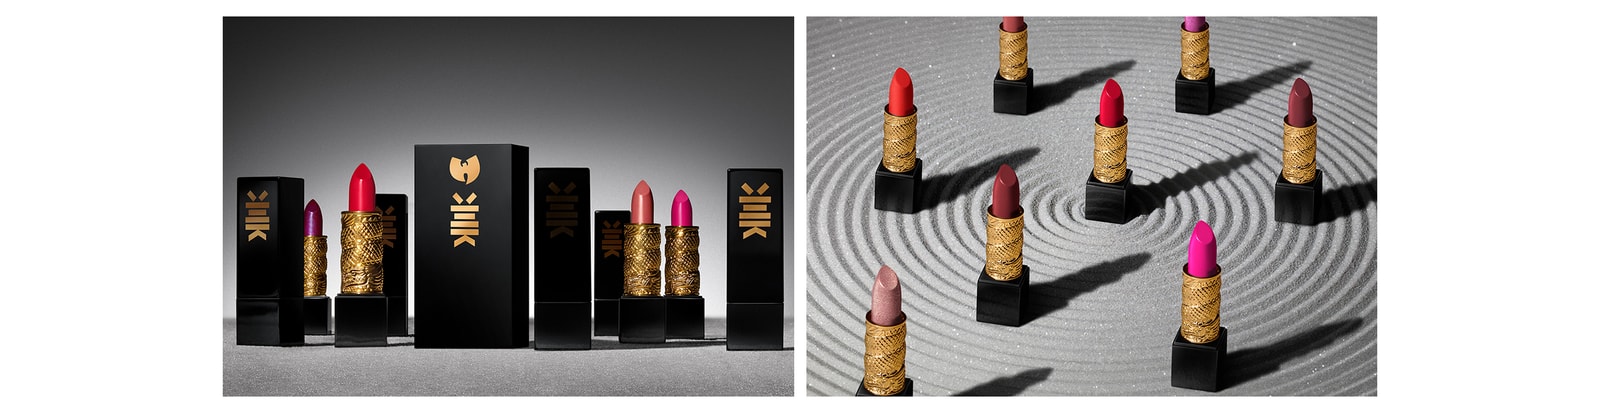 Teyana Taylor Wu-Tang x Milk Makeup Lipstick Collaboration Campaign